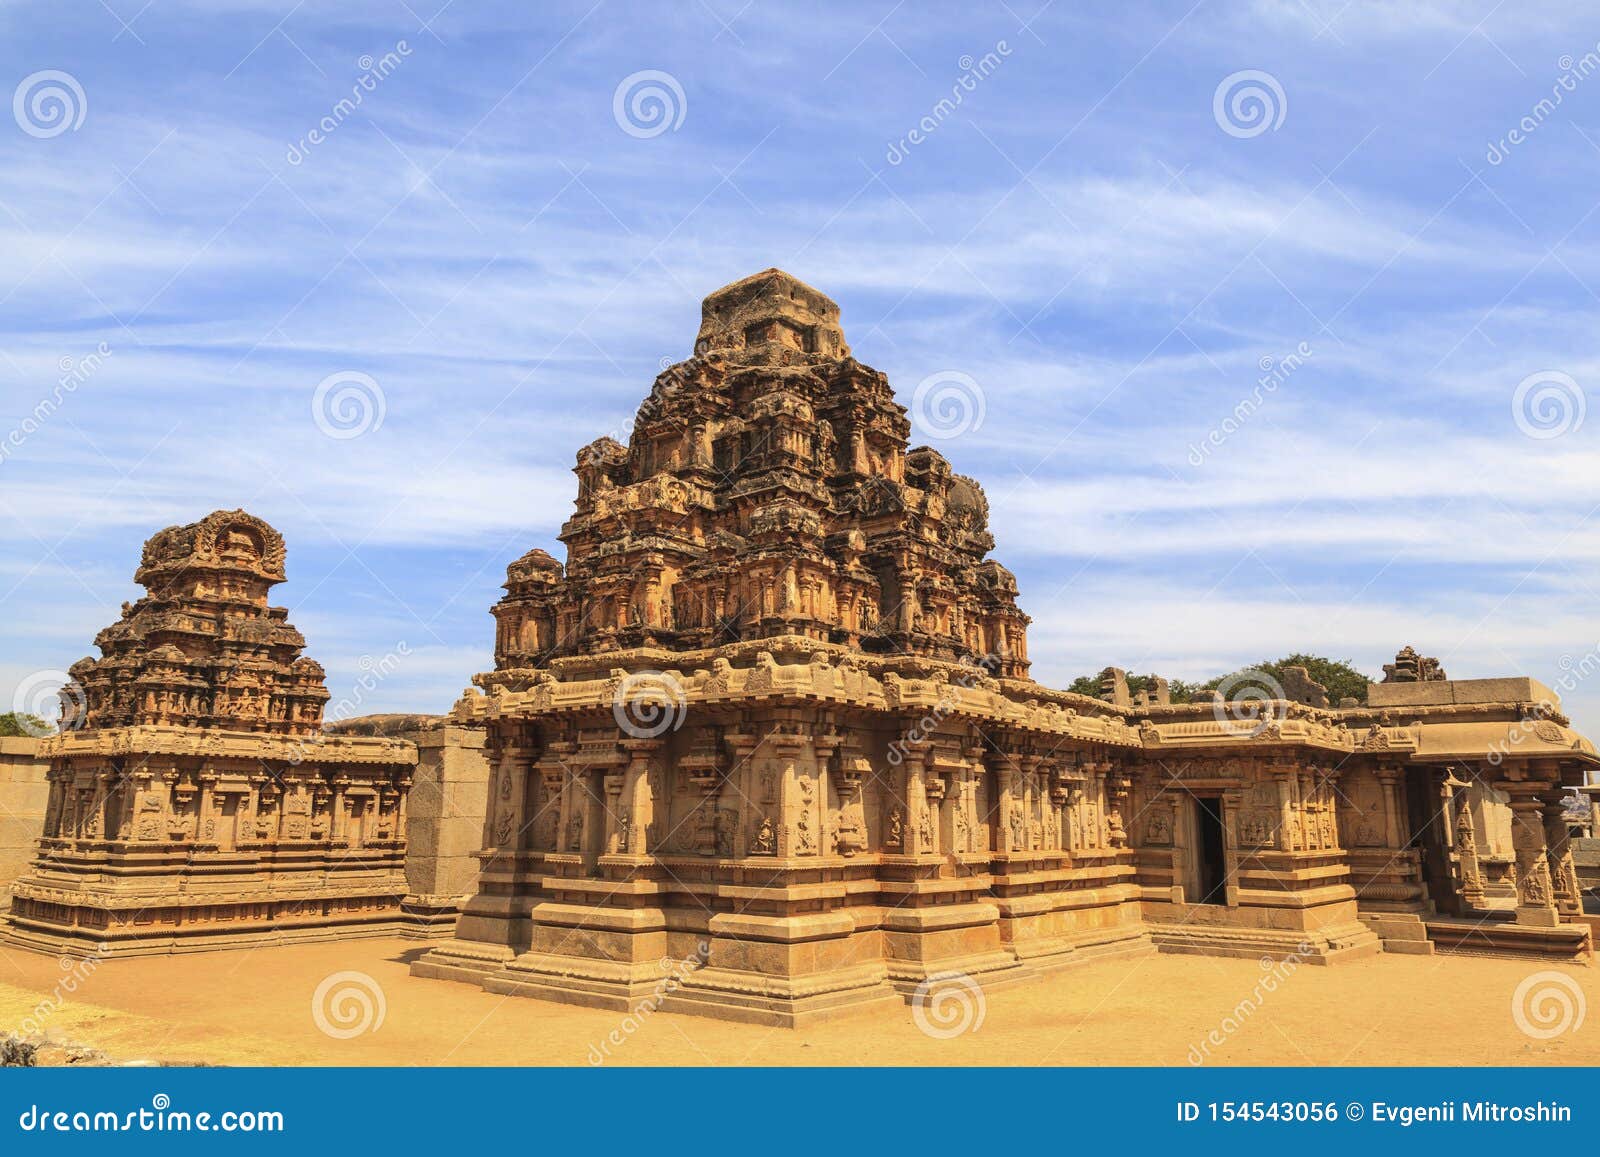 karnataka, hampi, india, ruins of the city of vijayanagar